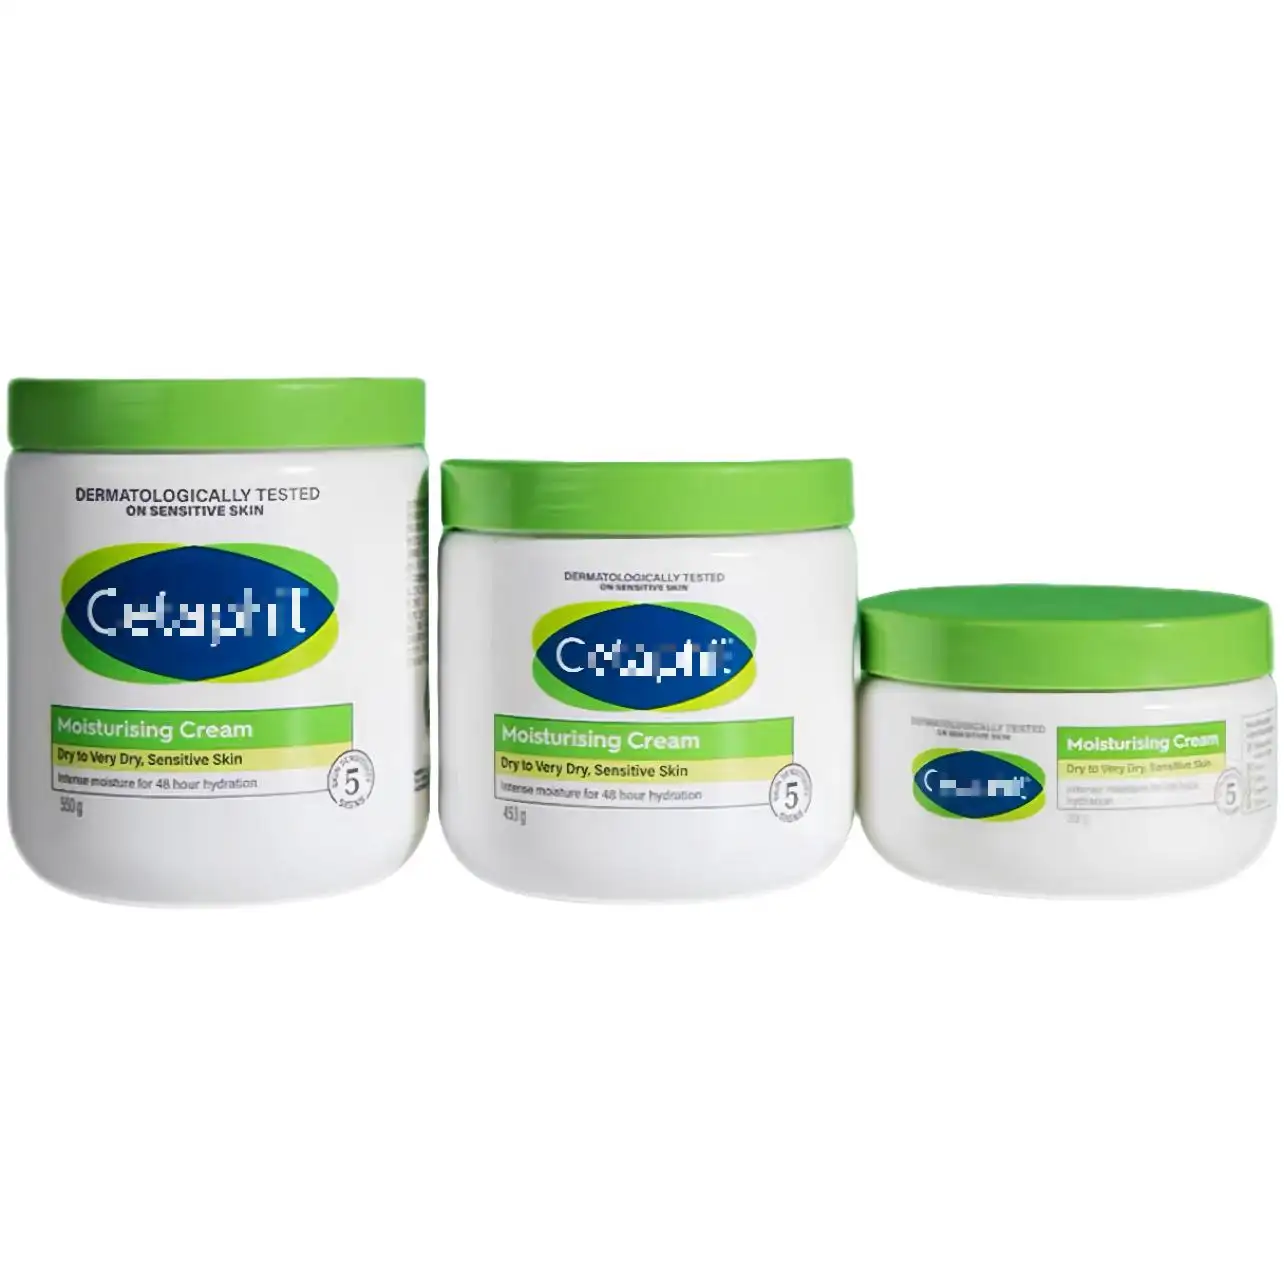 Cetaph Moisturizing Cream 550g hydrates restore the skin barrier nourish dry to normal sensitive skin face cream skincare